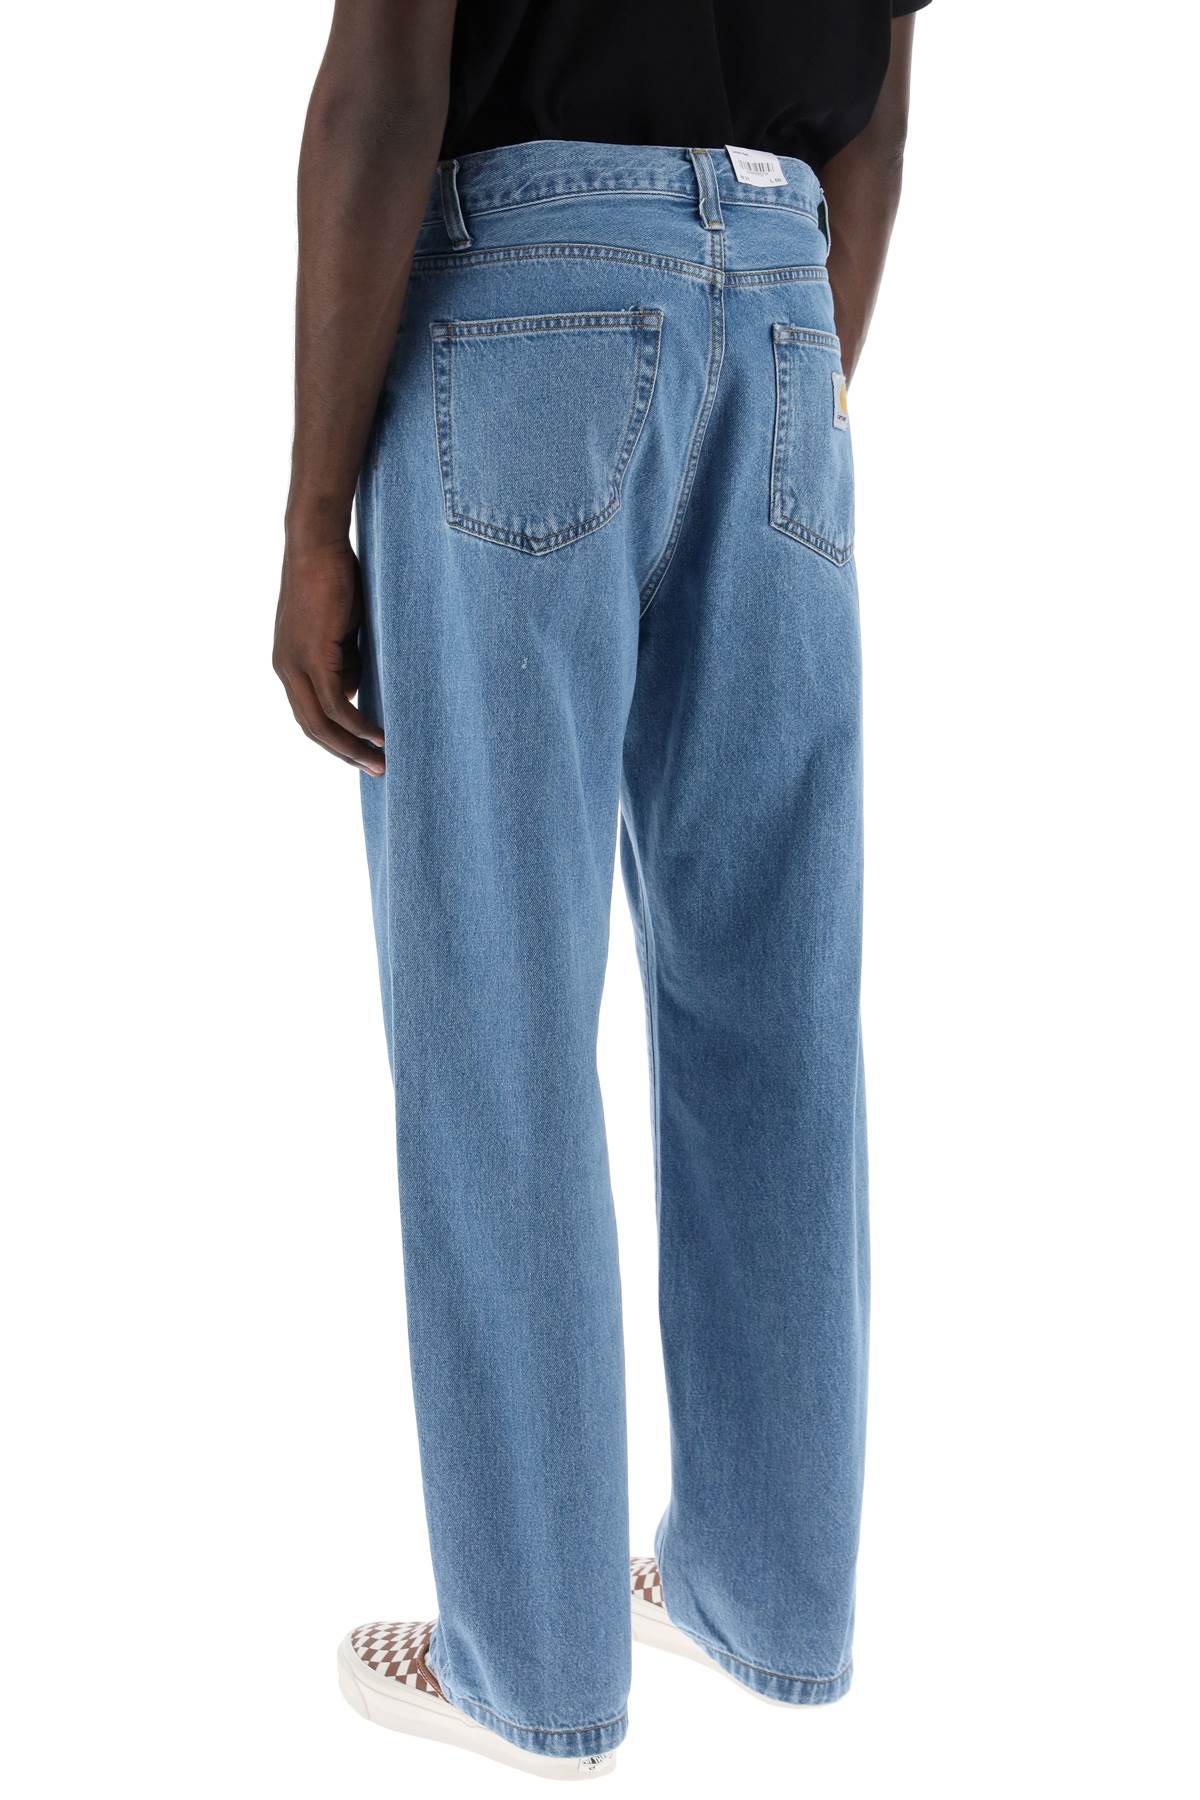 Carhartt Wip Loose Fit Landon Jeans   Light Blue